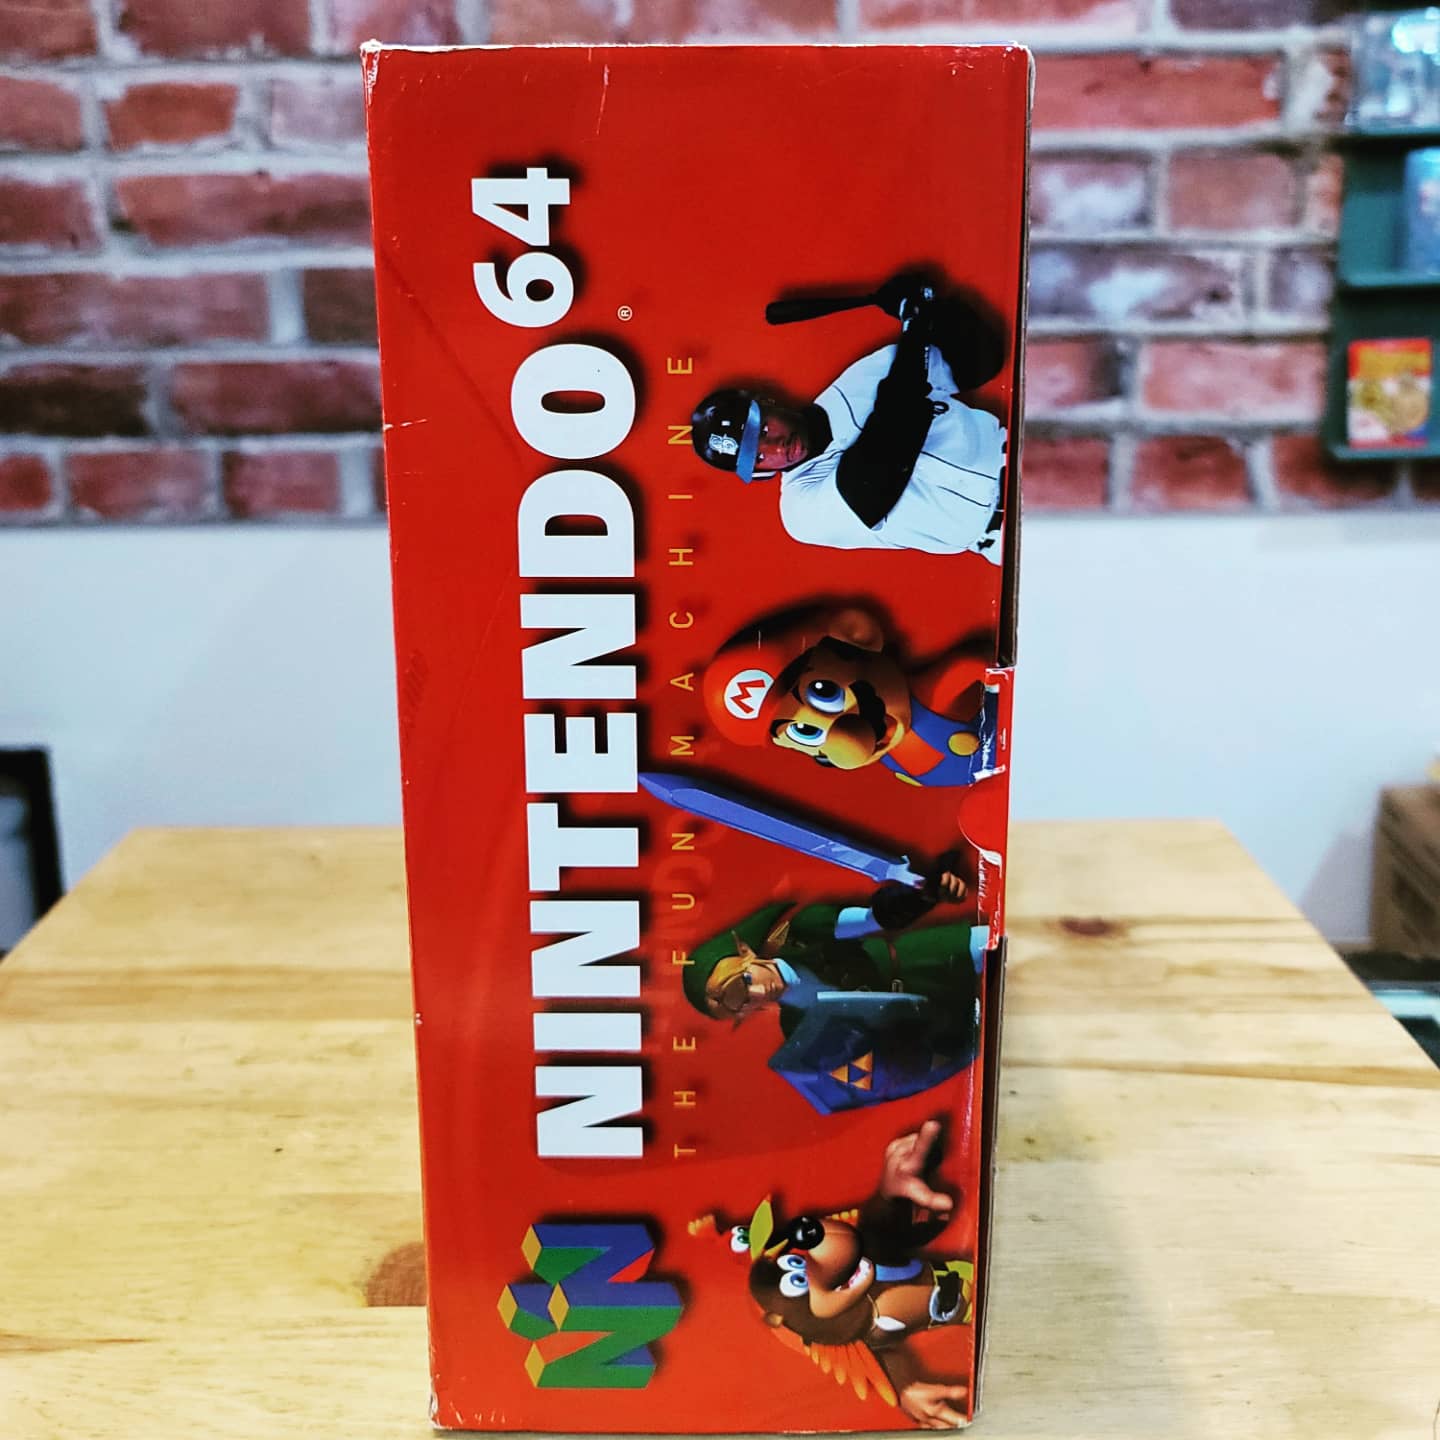 1998 Original Nintendo N64 Video Game System Mint New